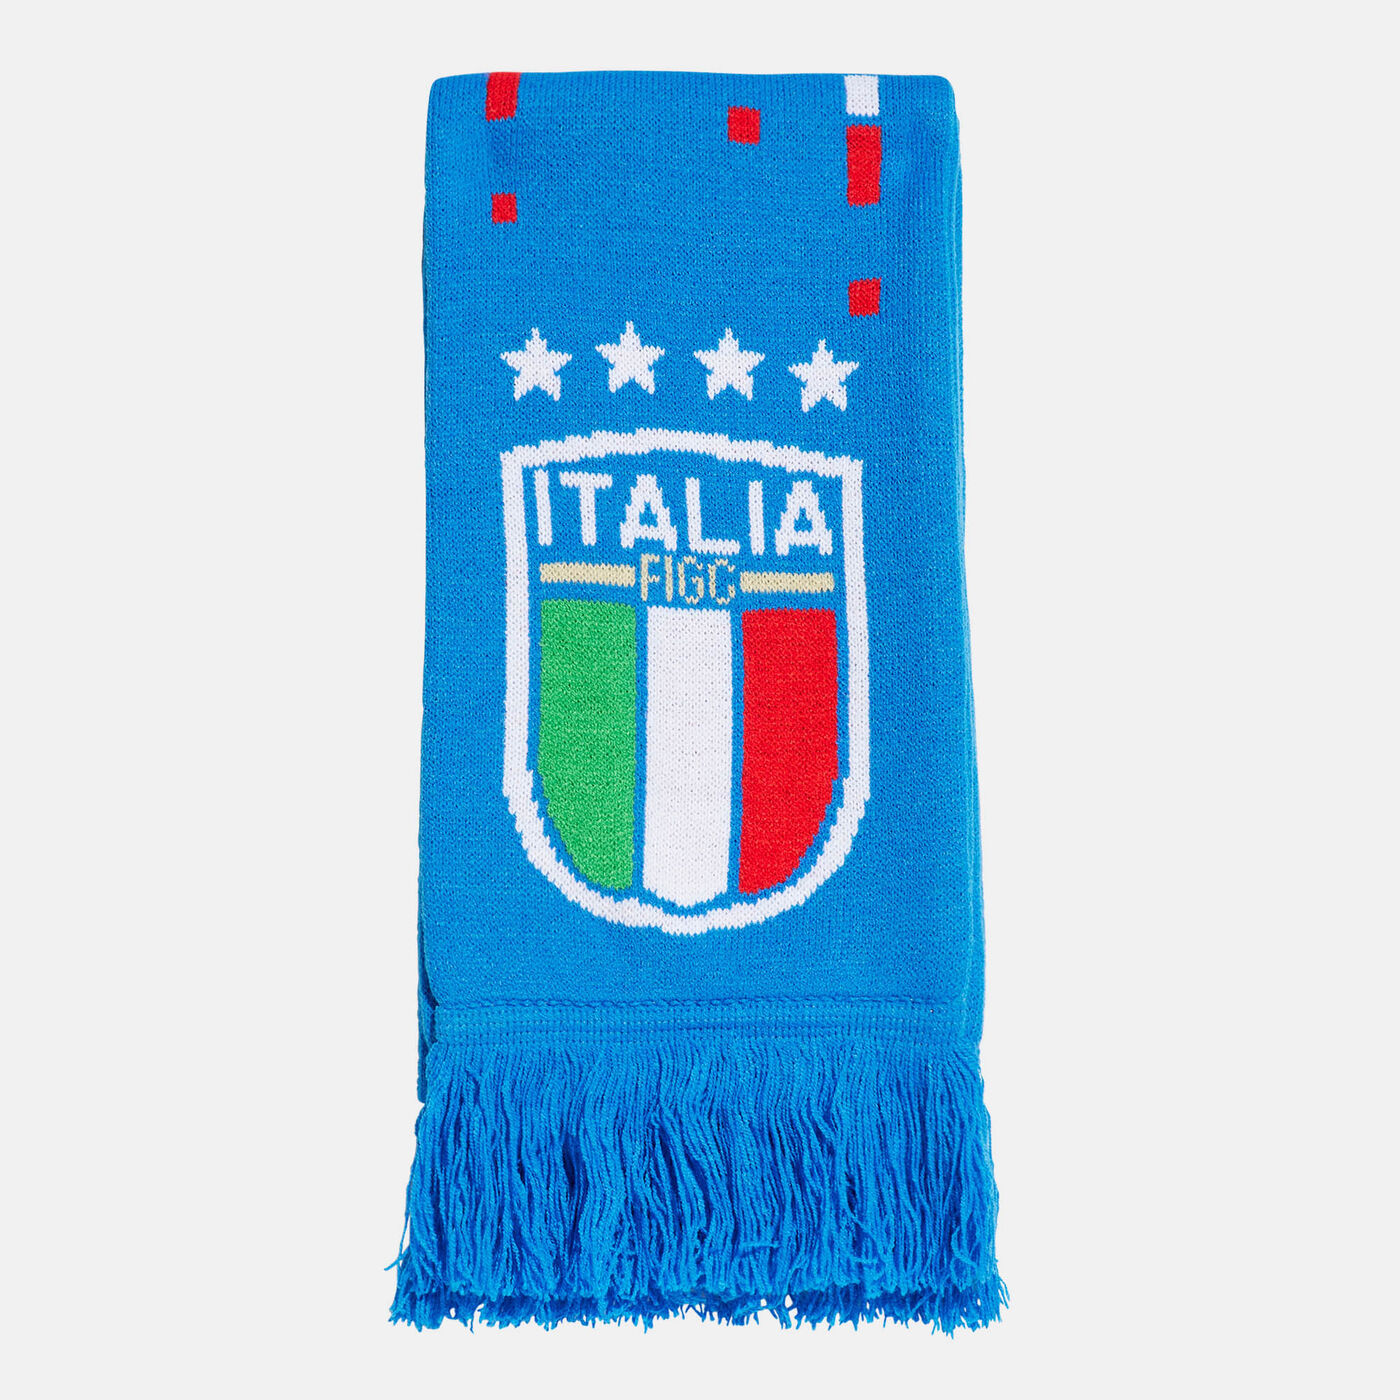 Italy Football Scarf